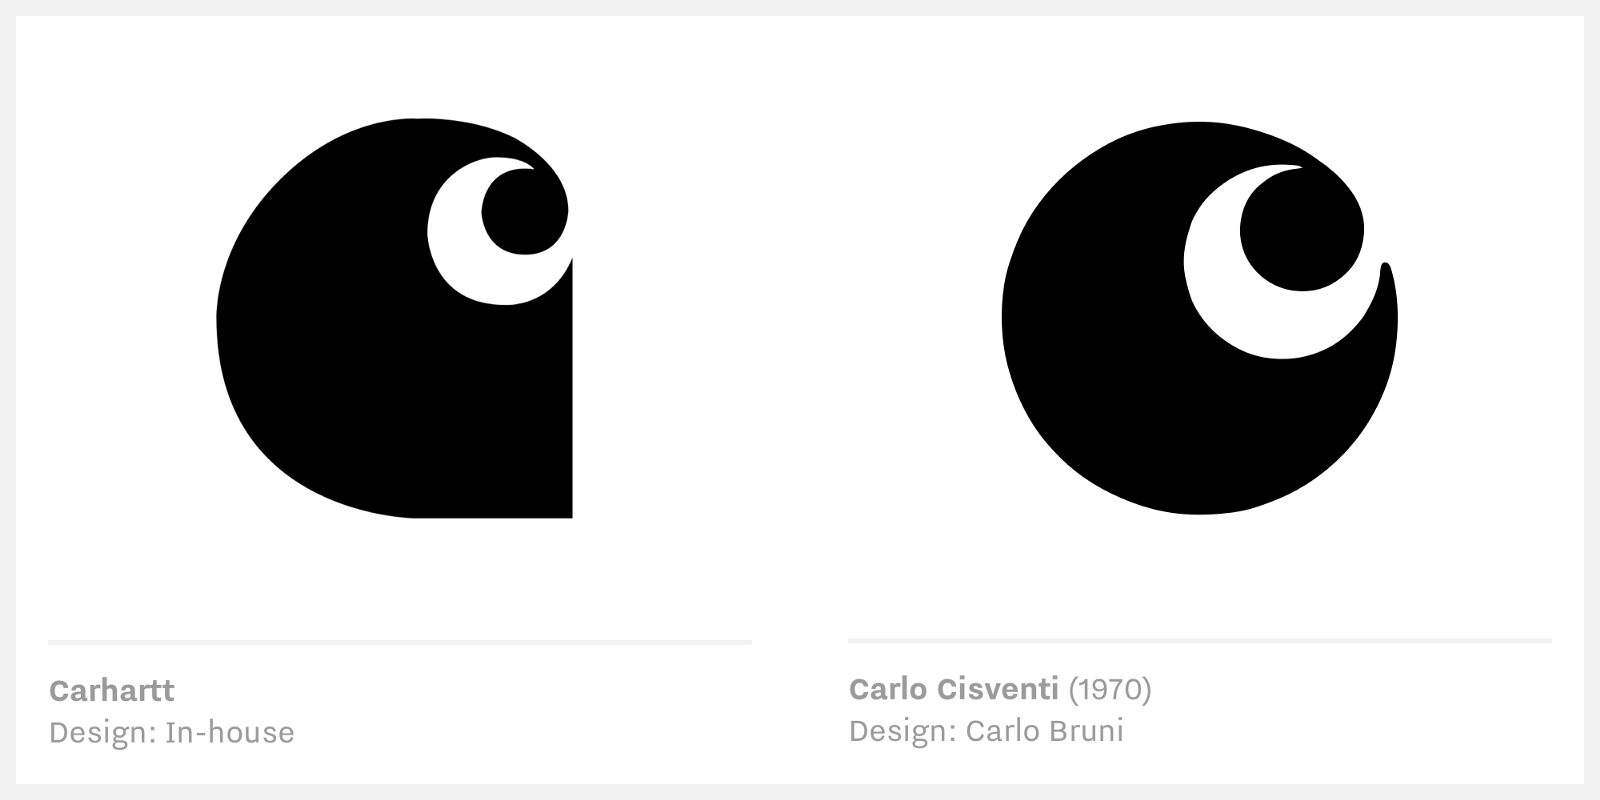 Carhartt Logo - Your logo is copied